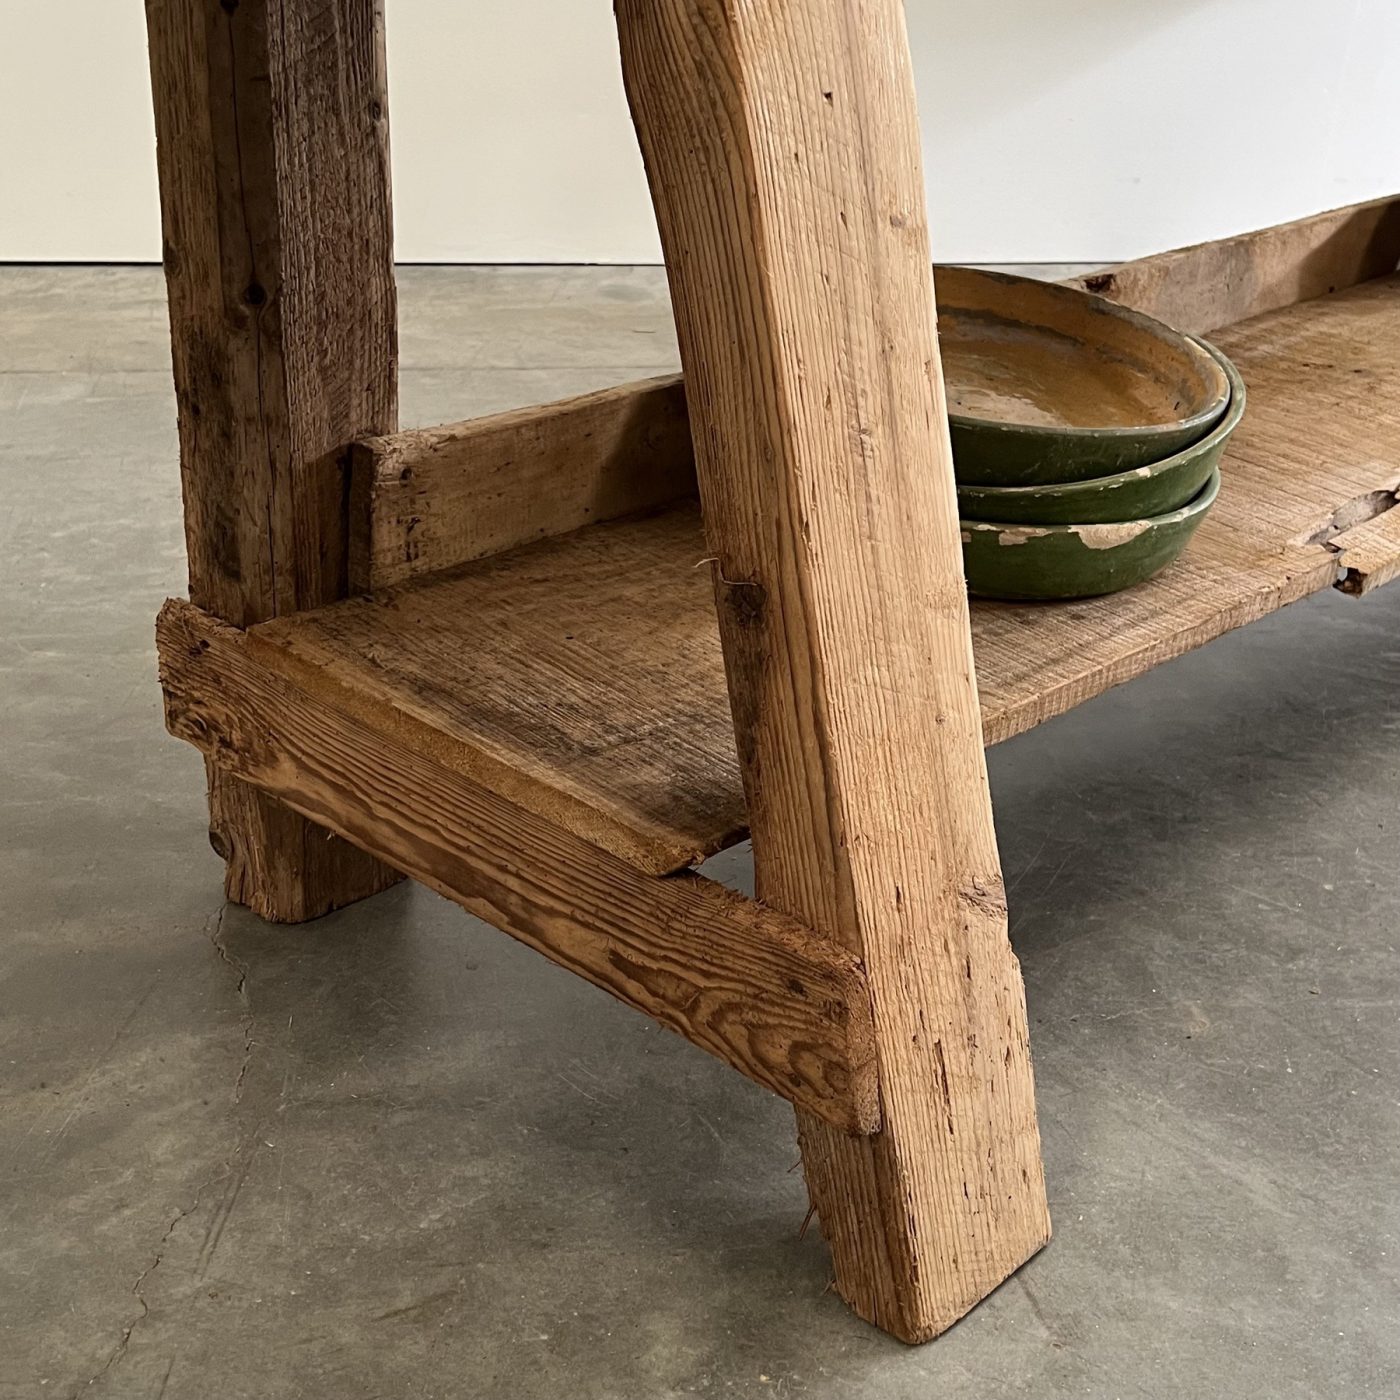 objet-vagabond-carpenter-table0003